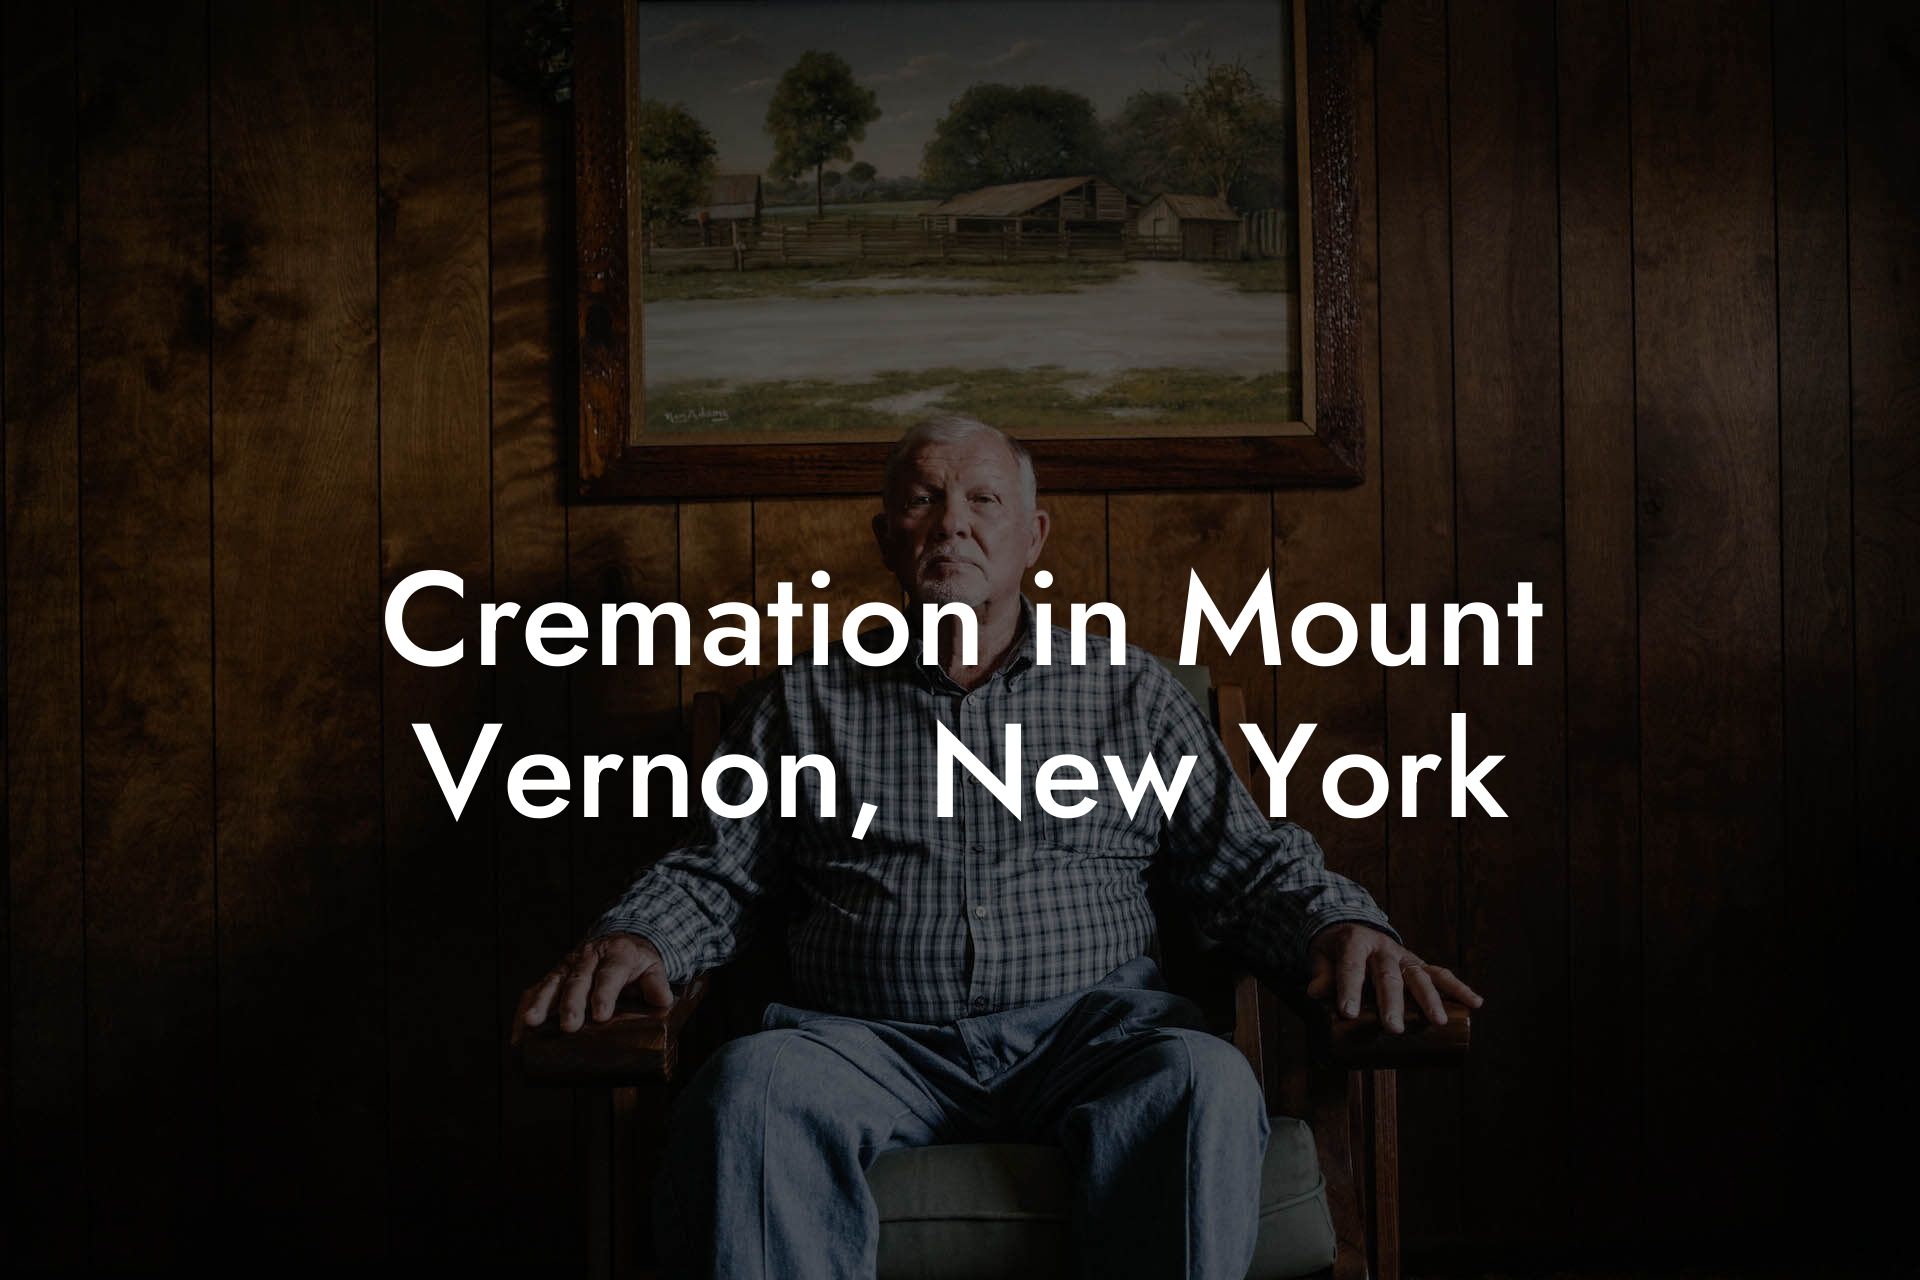 Cremation in Mount Vernon, New York